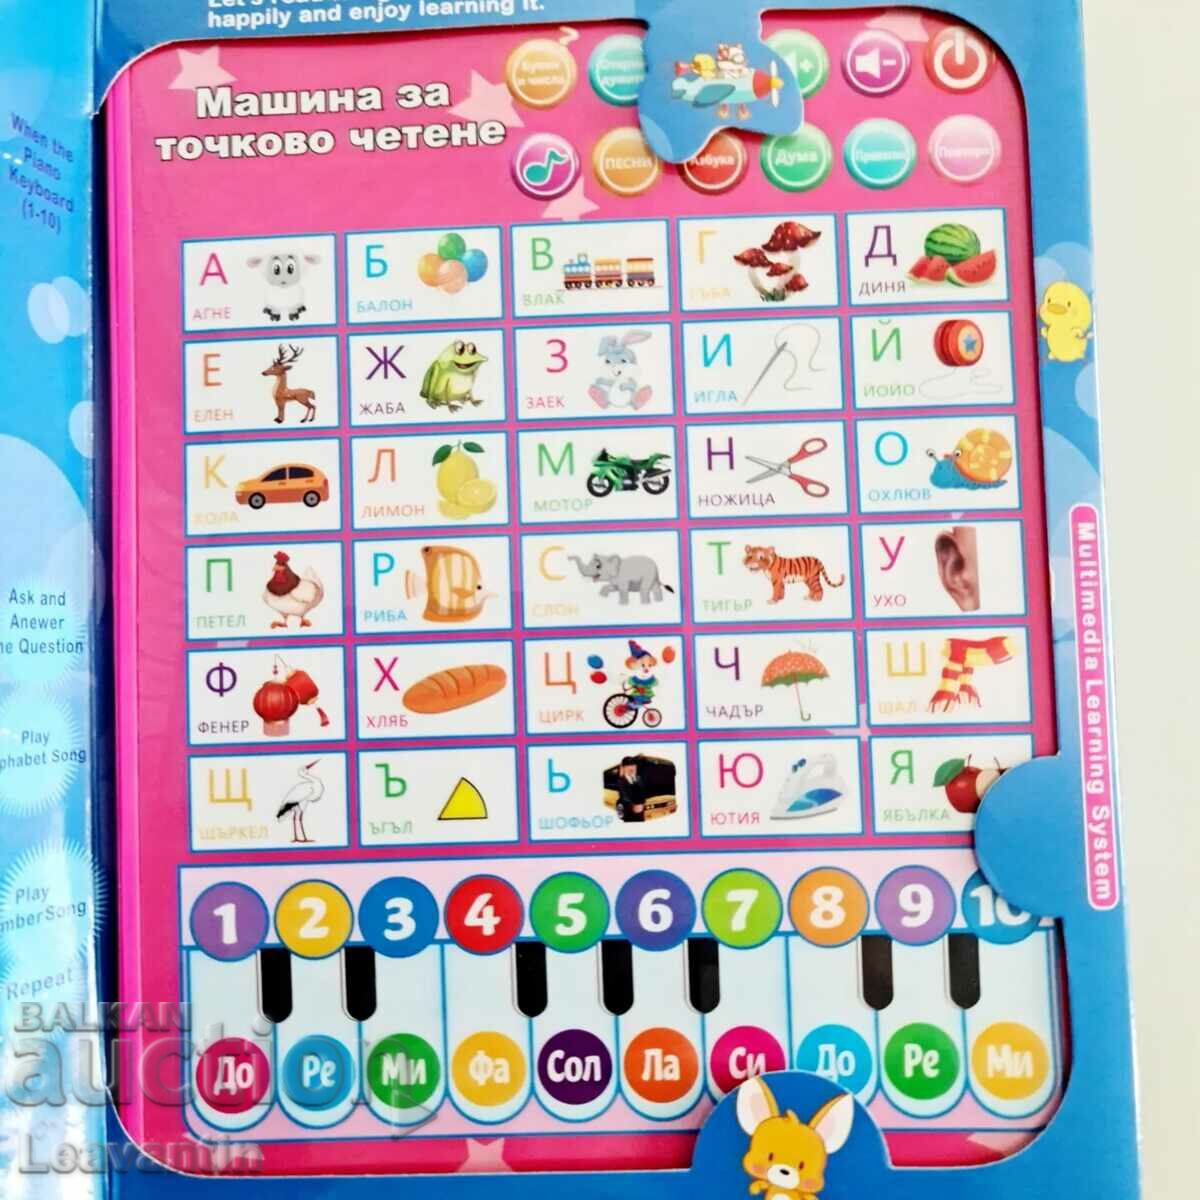 Children's educational tablet in BULGARIAN LANGUAGE